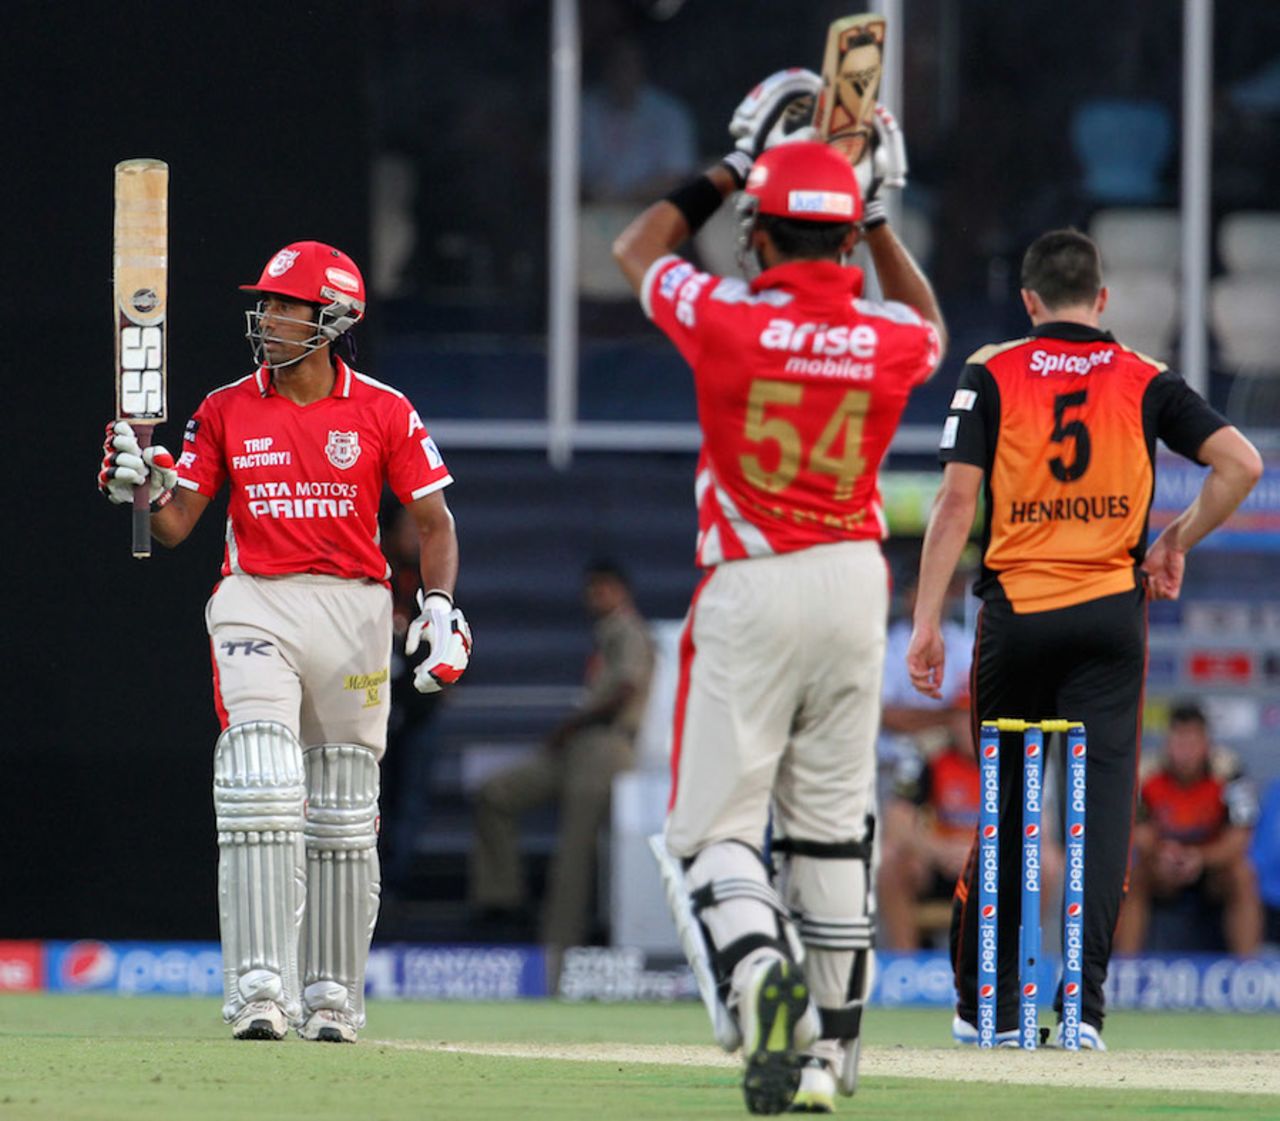 Wriddhiman Saha reached his half-century in 22 balls, Sunrisers Hyderabad v Kings XI Punjab, IPL 2014, Hyderabad, May 14, 2014